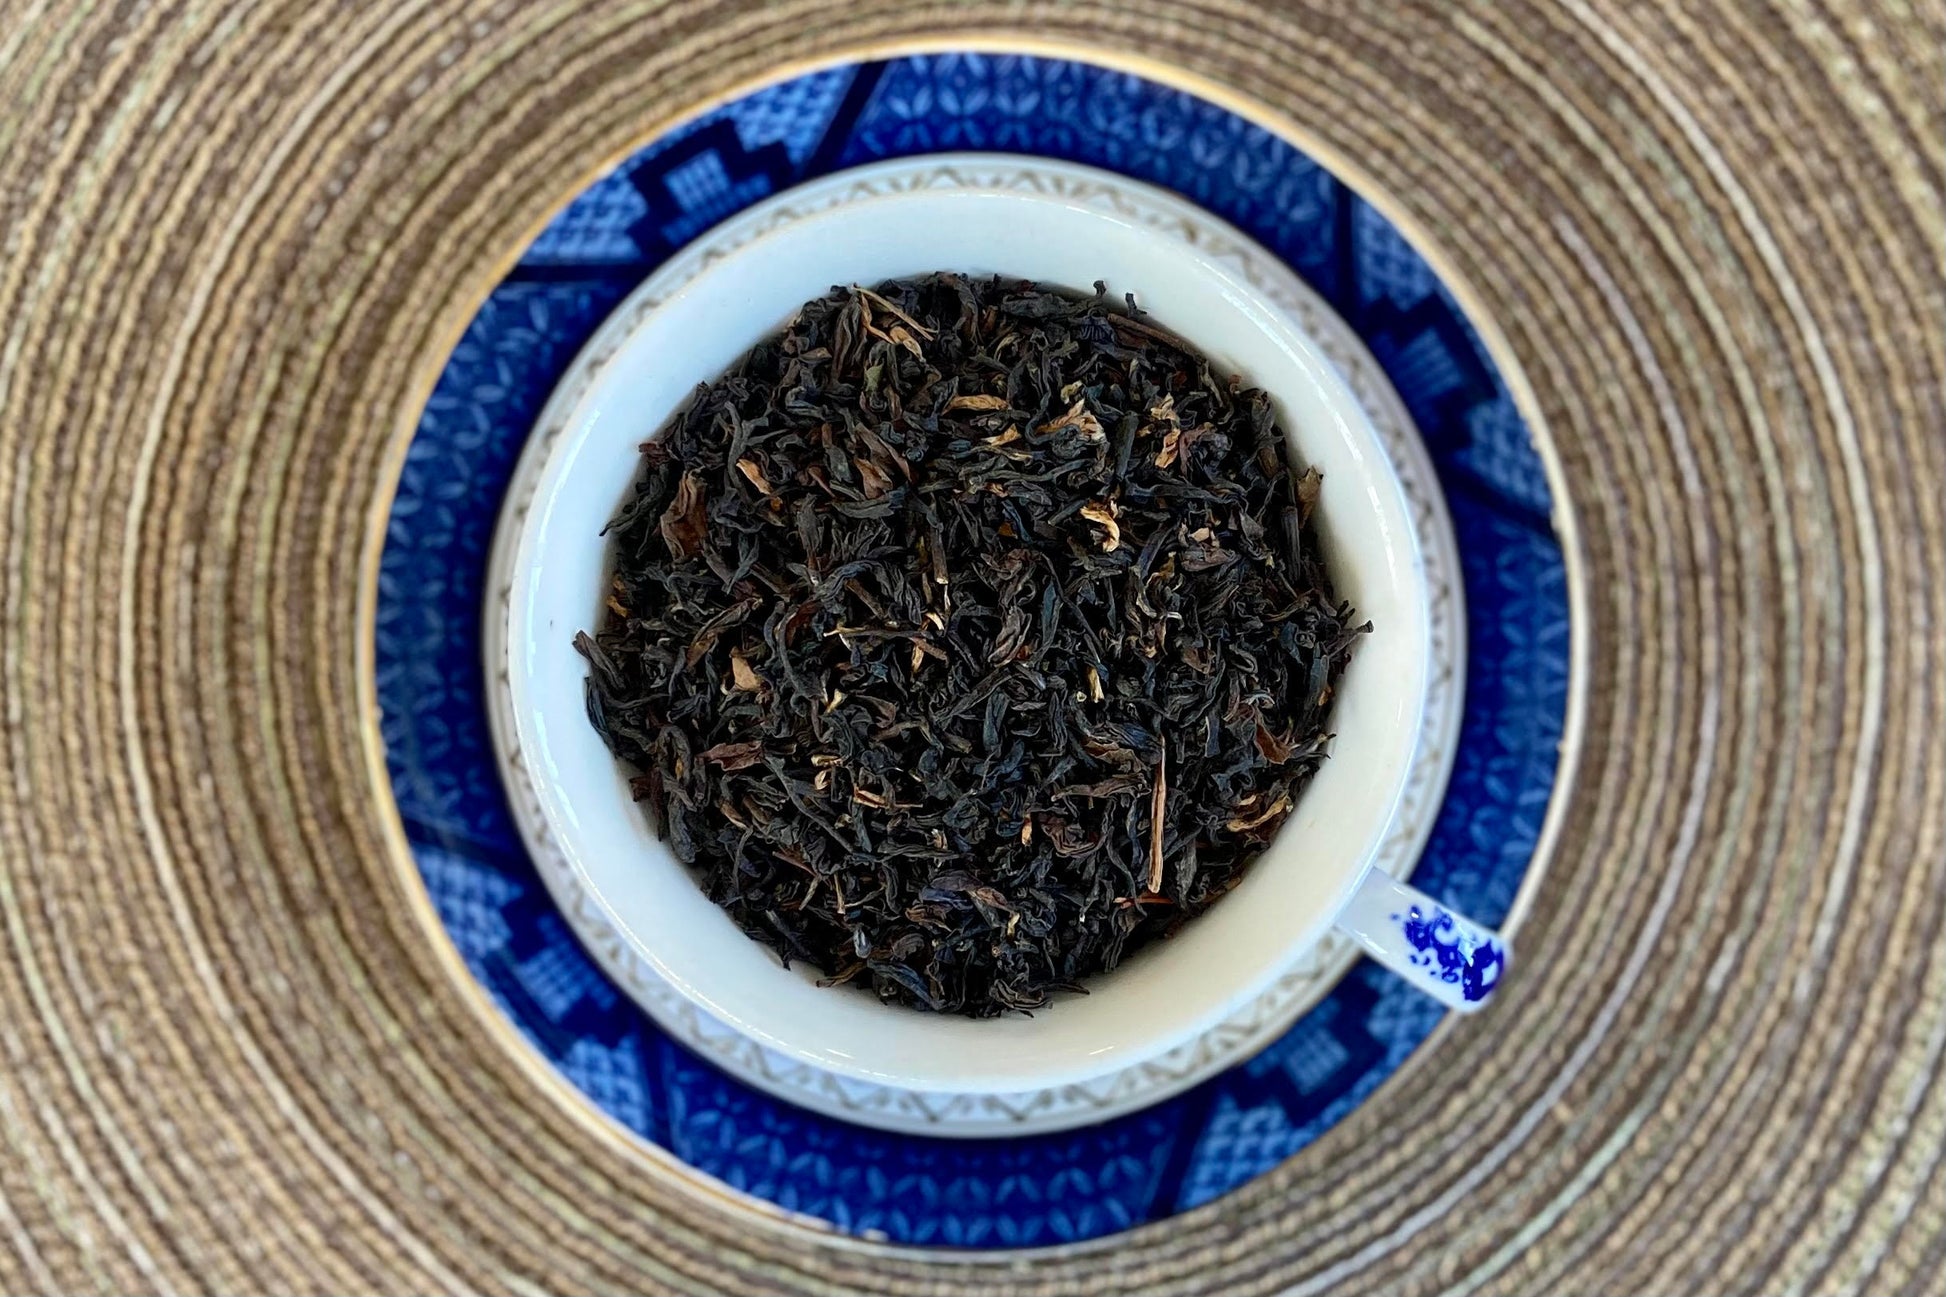 teacup full of black tea with scattered golden tips